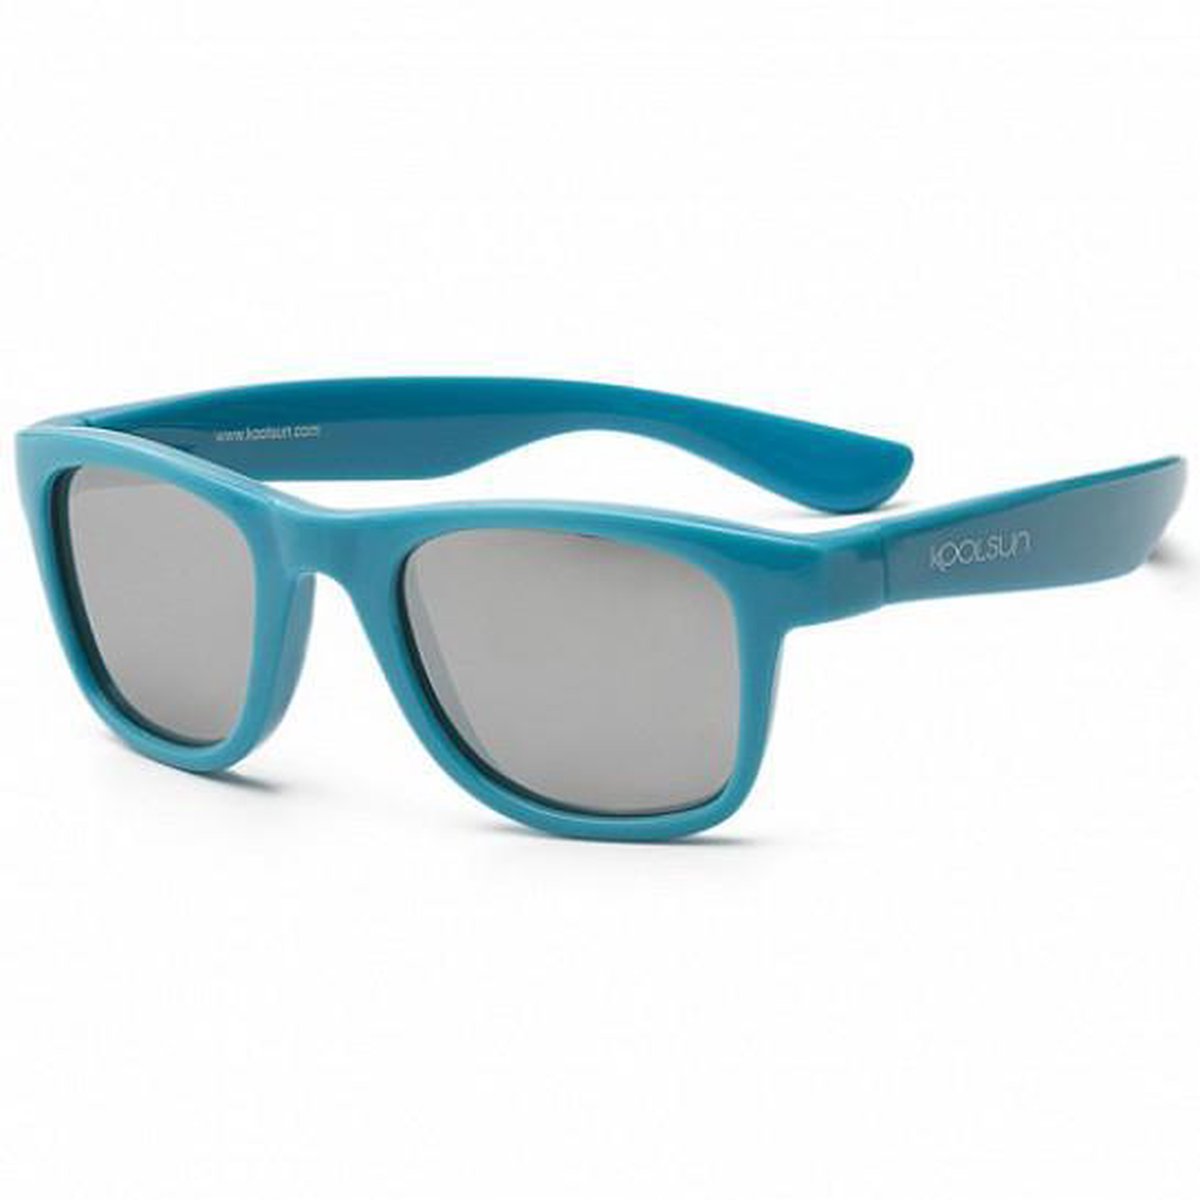 KOOLSUN - Wave - Kinder zonnebril - Cendre Blue - 3-10 jaar- UV400 - Categorie 3